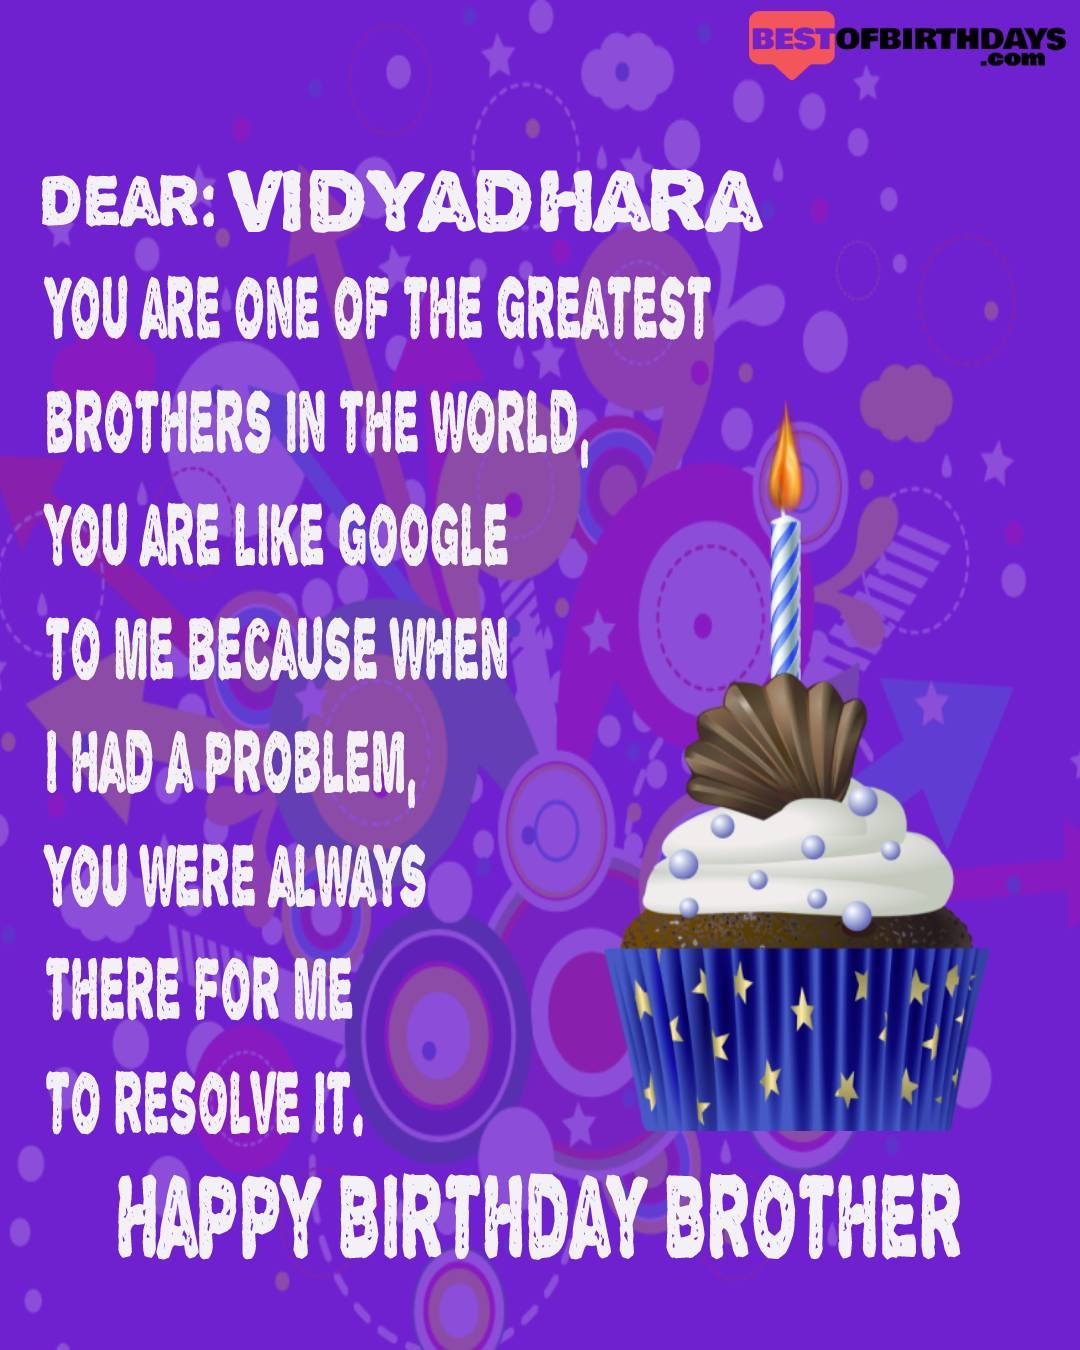 Happy birthday vidyadhara bhai brother bro